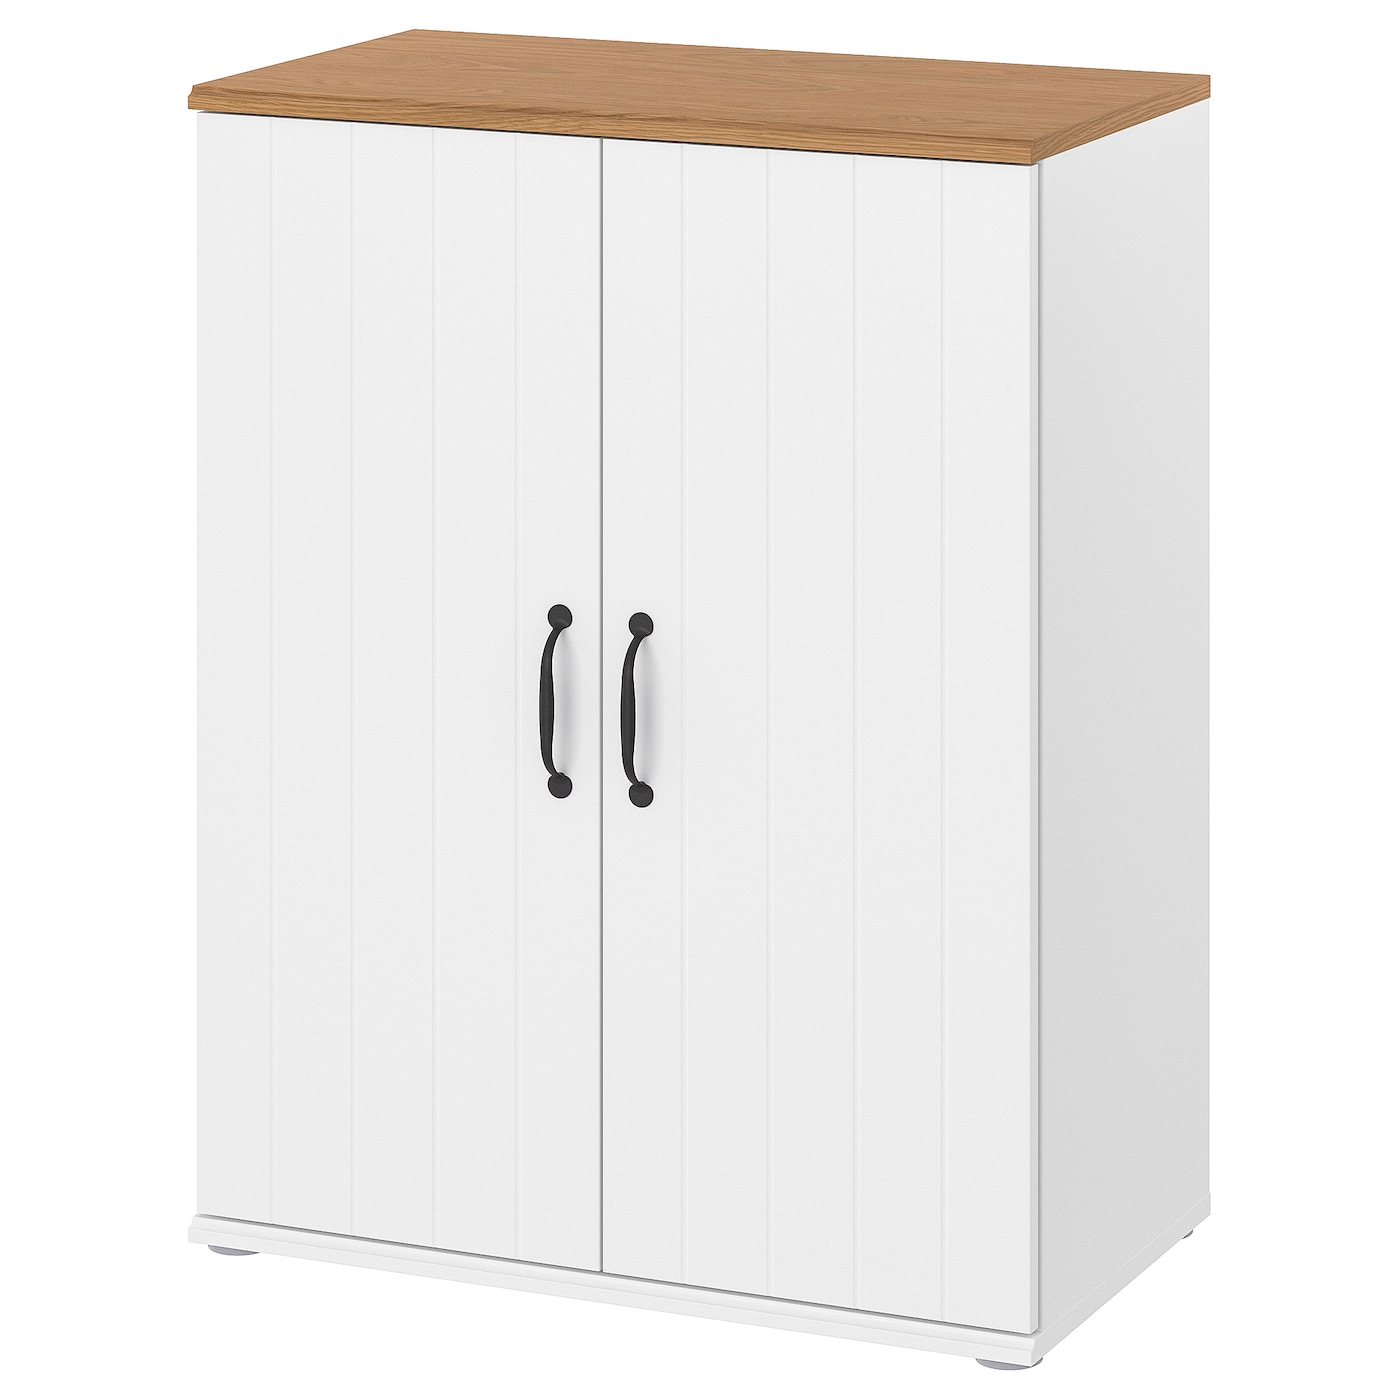 Шкаф - SKRUVBY  IKEA/ СКРУВБИ ИКЕА, 70x90 см, белый/под беленый дуб